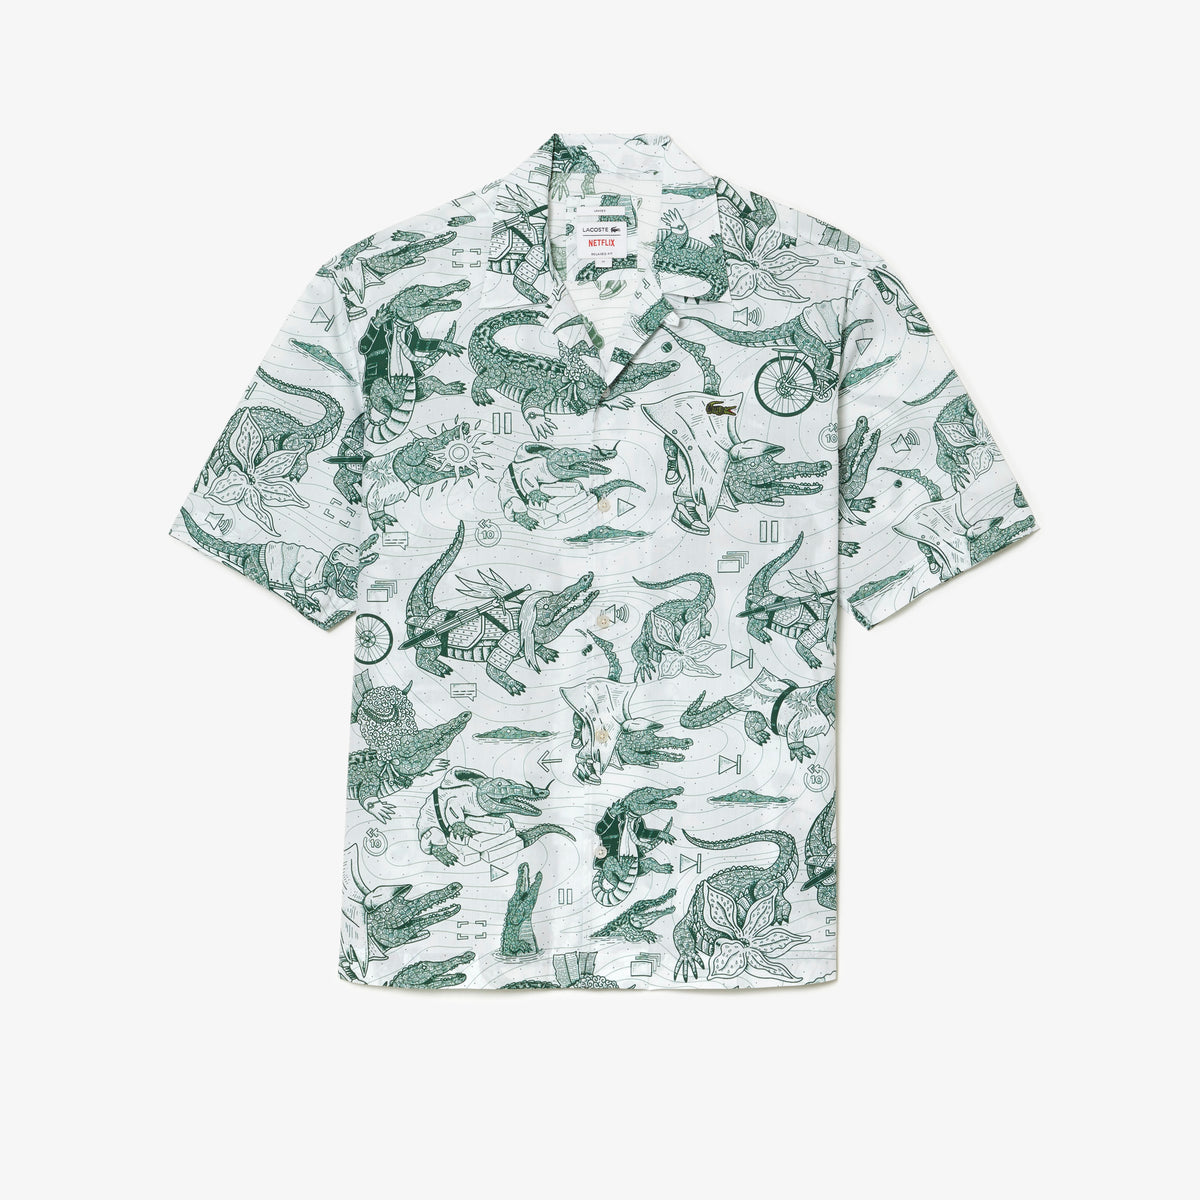 Lacoste x Netflix - Unisex Short Sleeve Printed Shirt - Multicolor